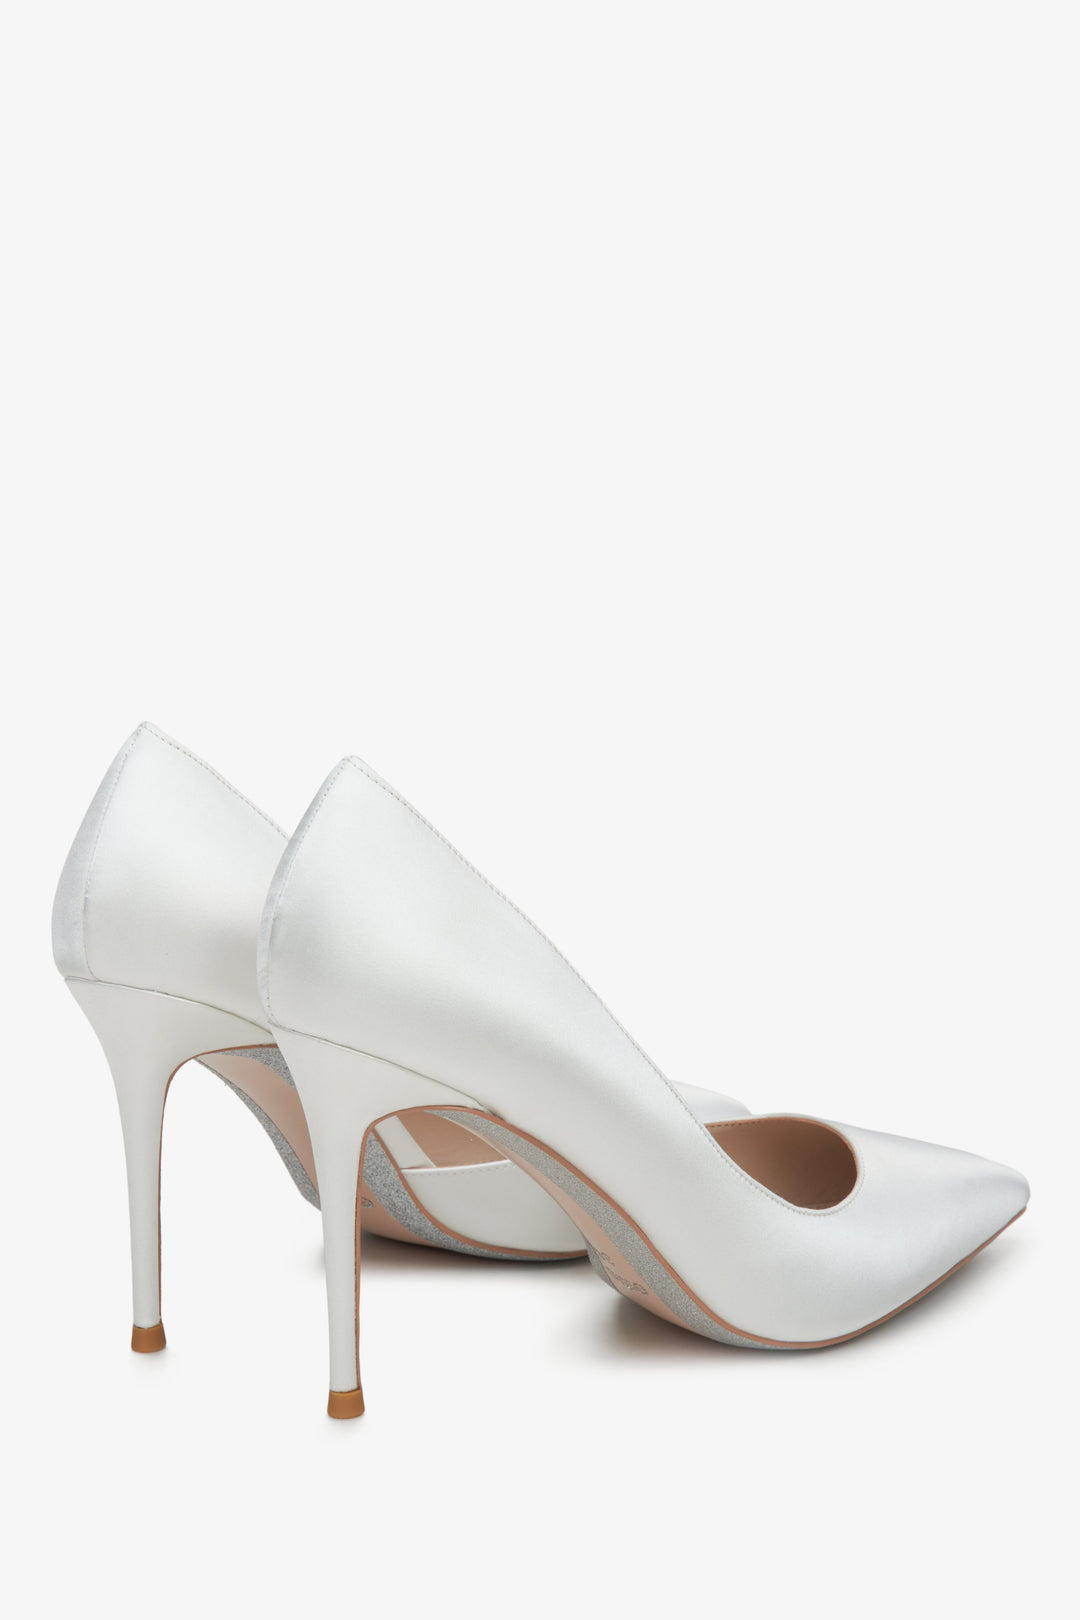 Women's milk-white Estro high heels with satin finish - close-up on the heel.